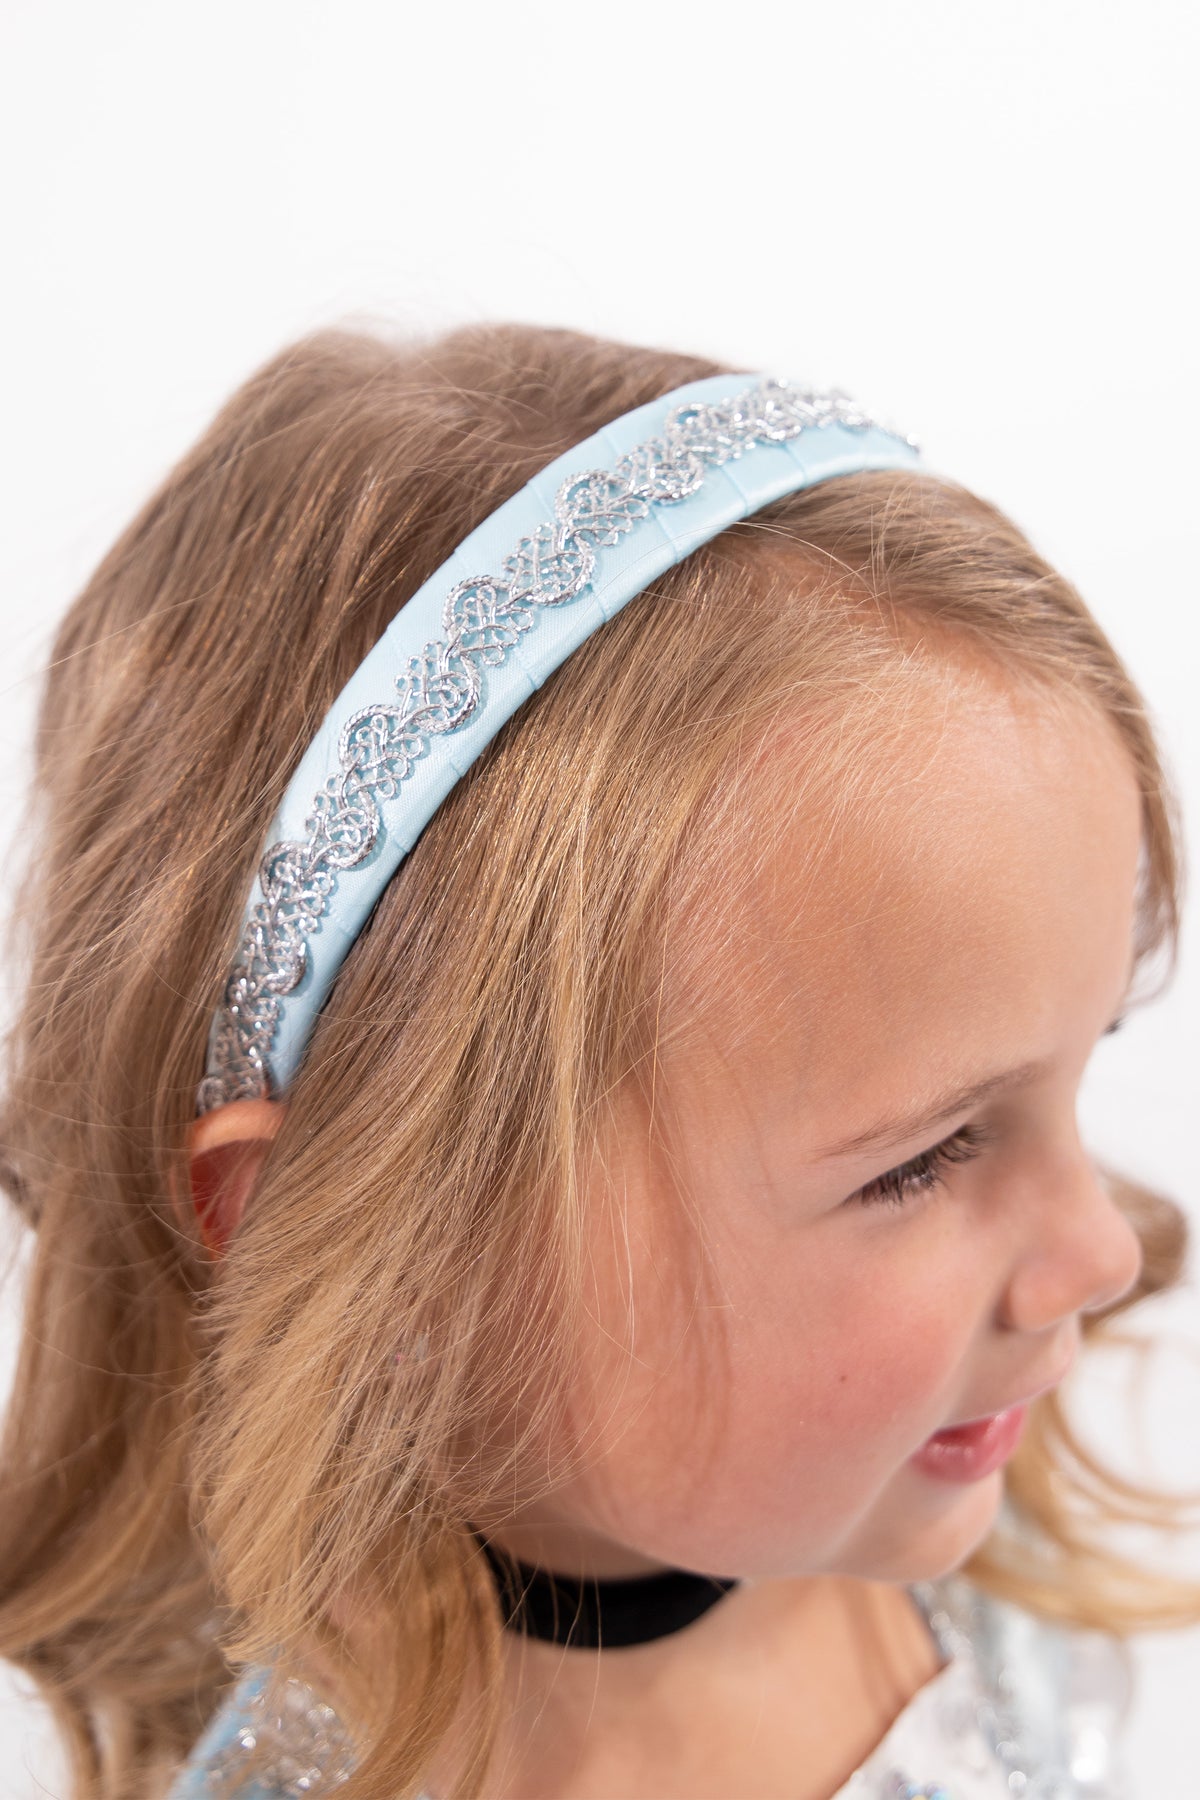 Easy hairstyle for your little Cinderella 🎀 #cinderella#hairstyle#hai... |  TikTok